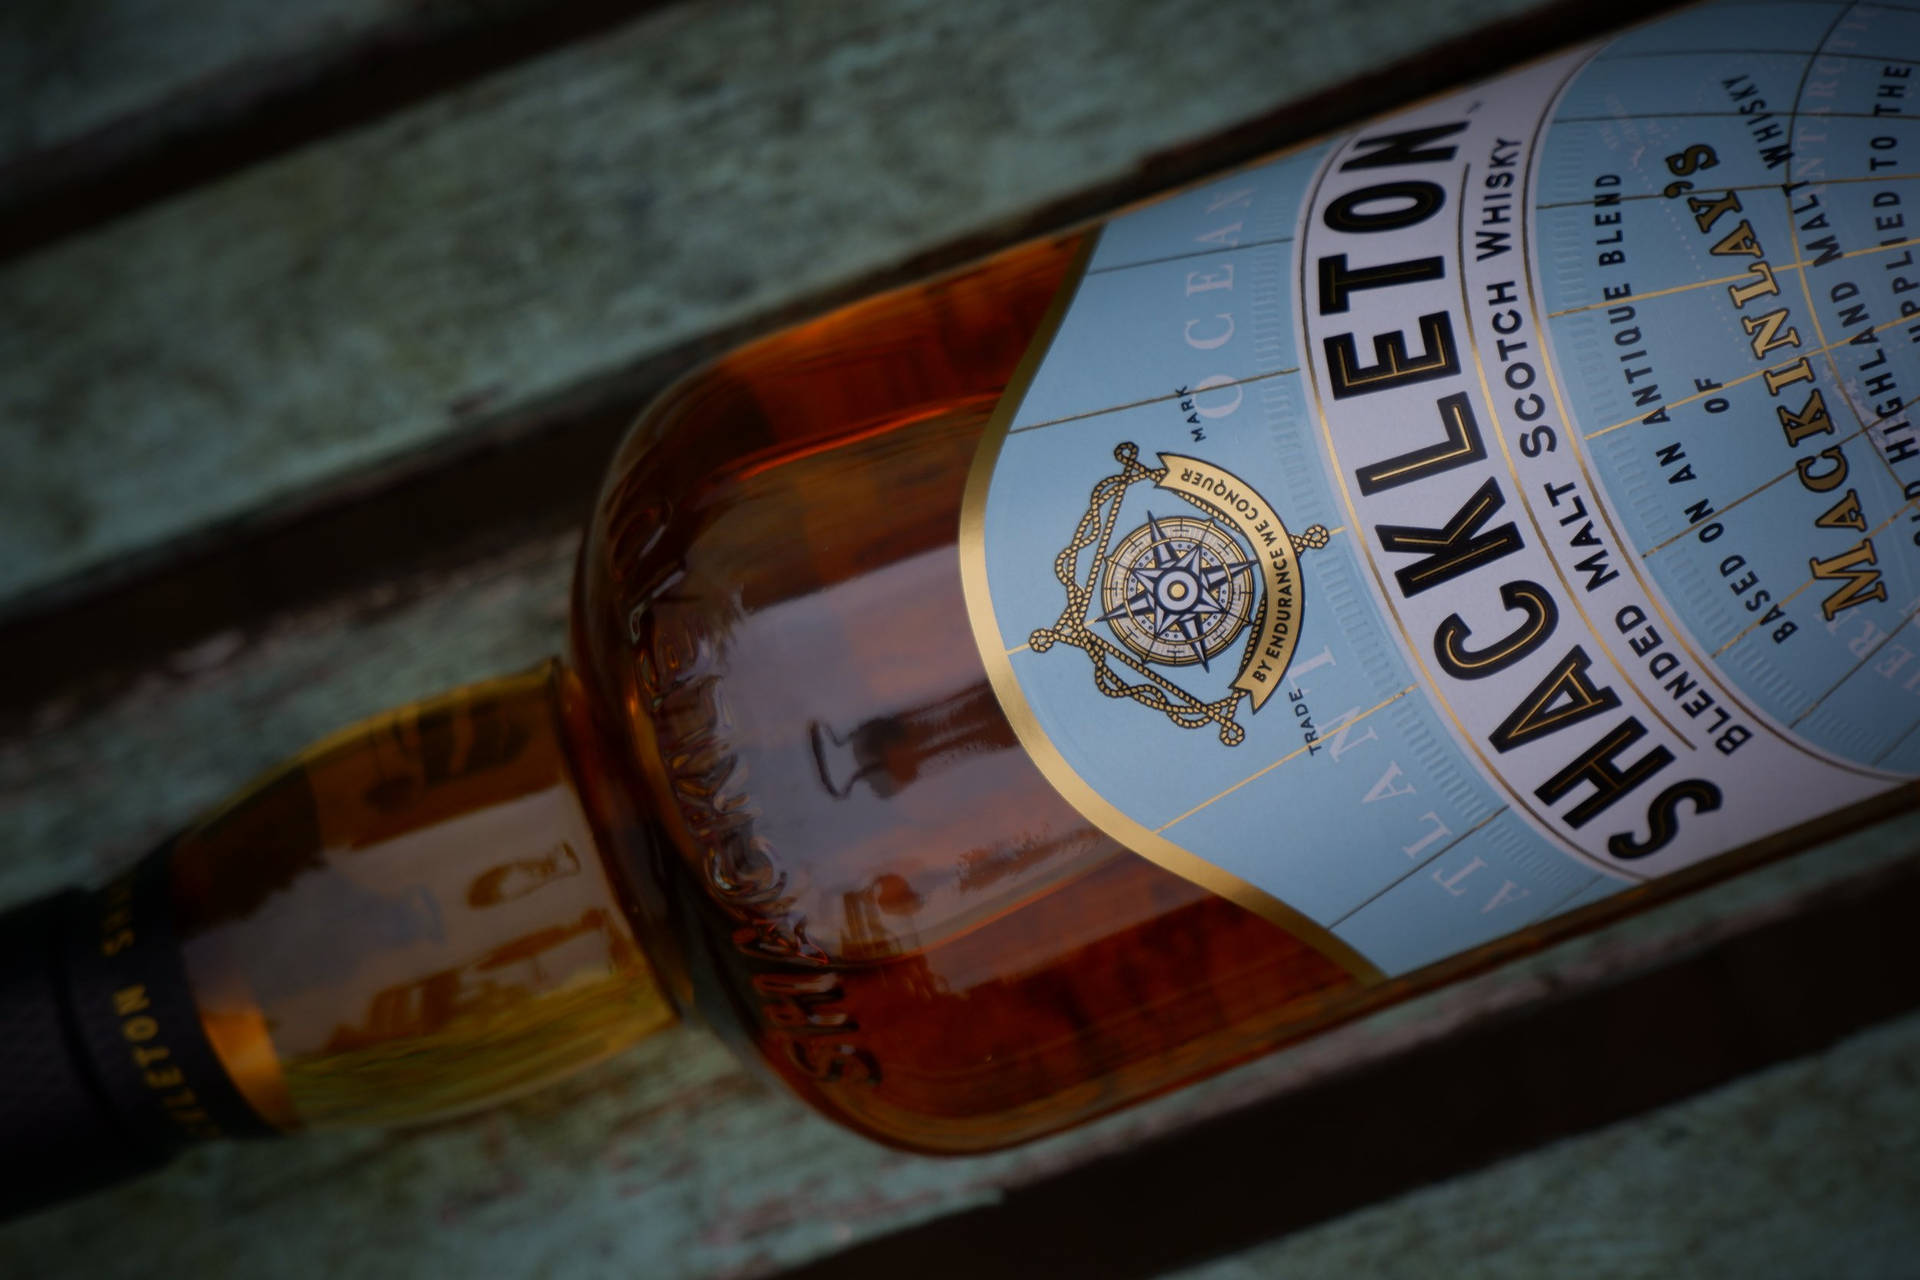 Shackleton Blended Malt Scotch Whisky - Whisky Escocês Maltado Blend Shackleton. Papel de Parede